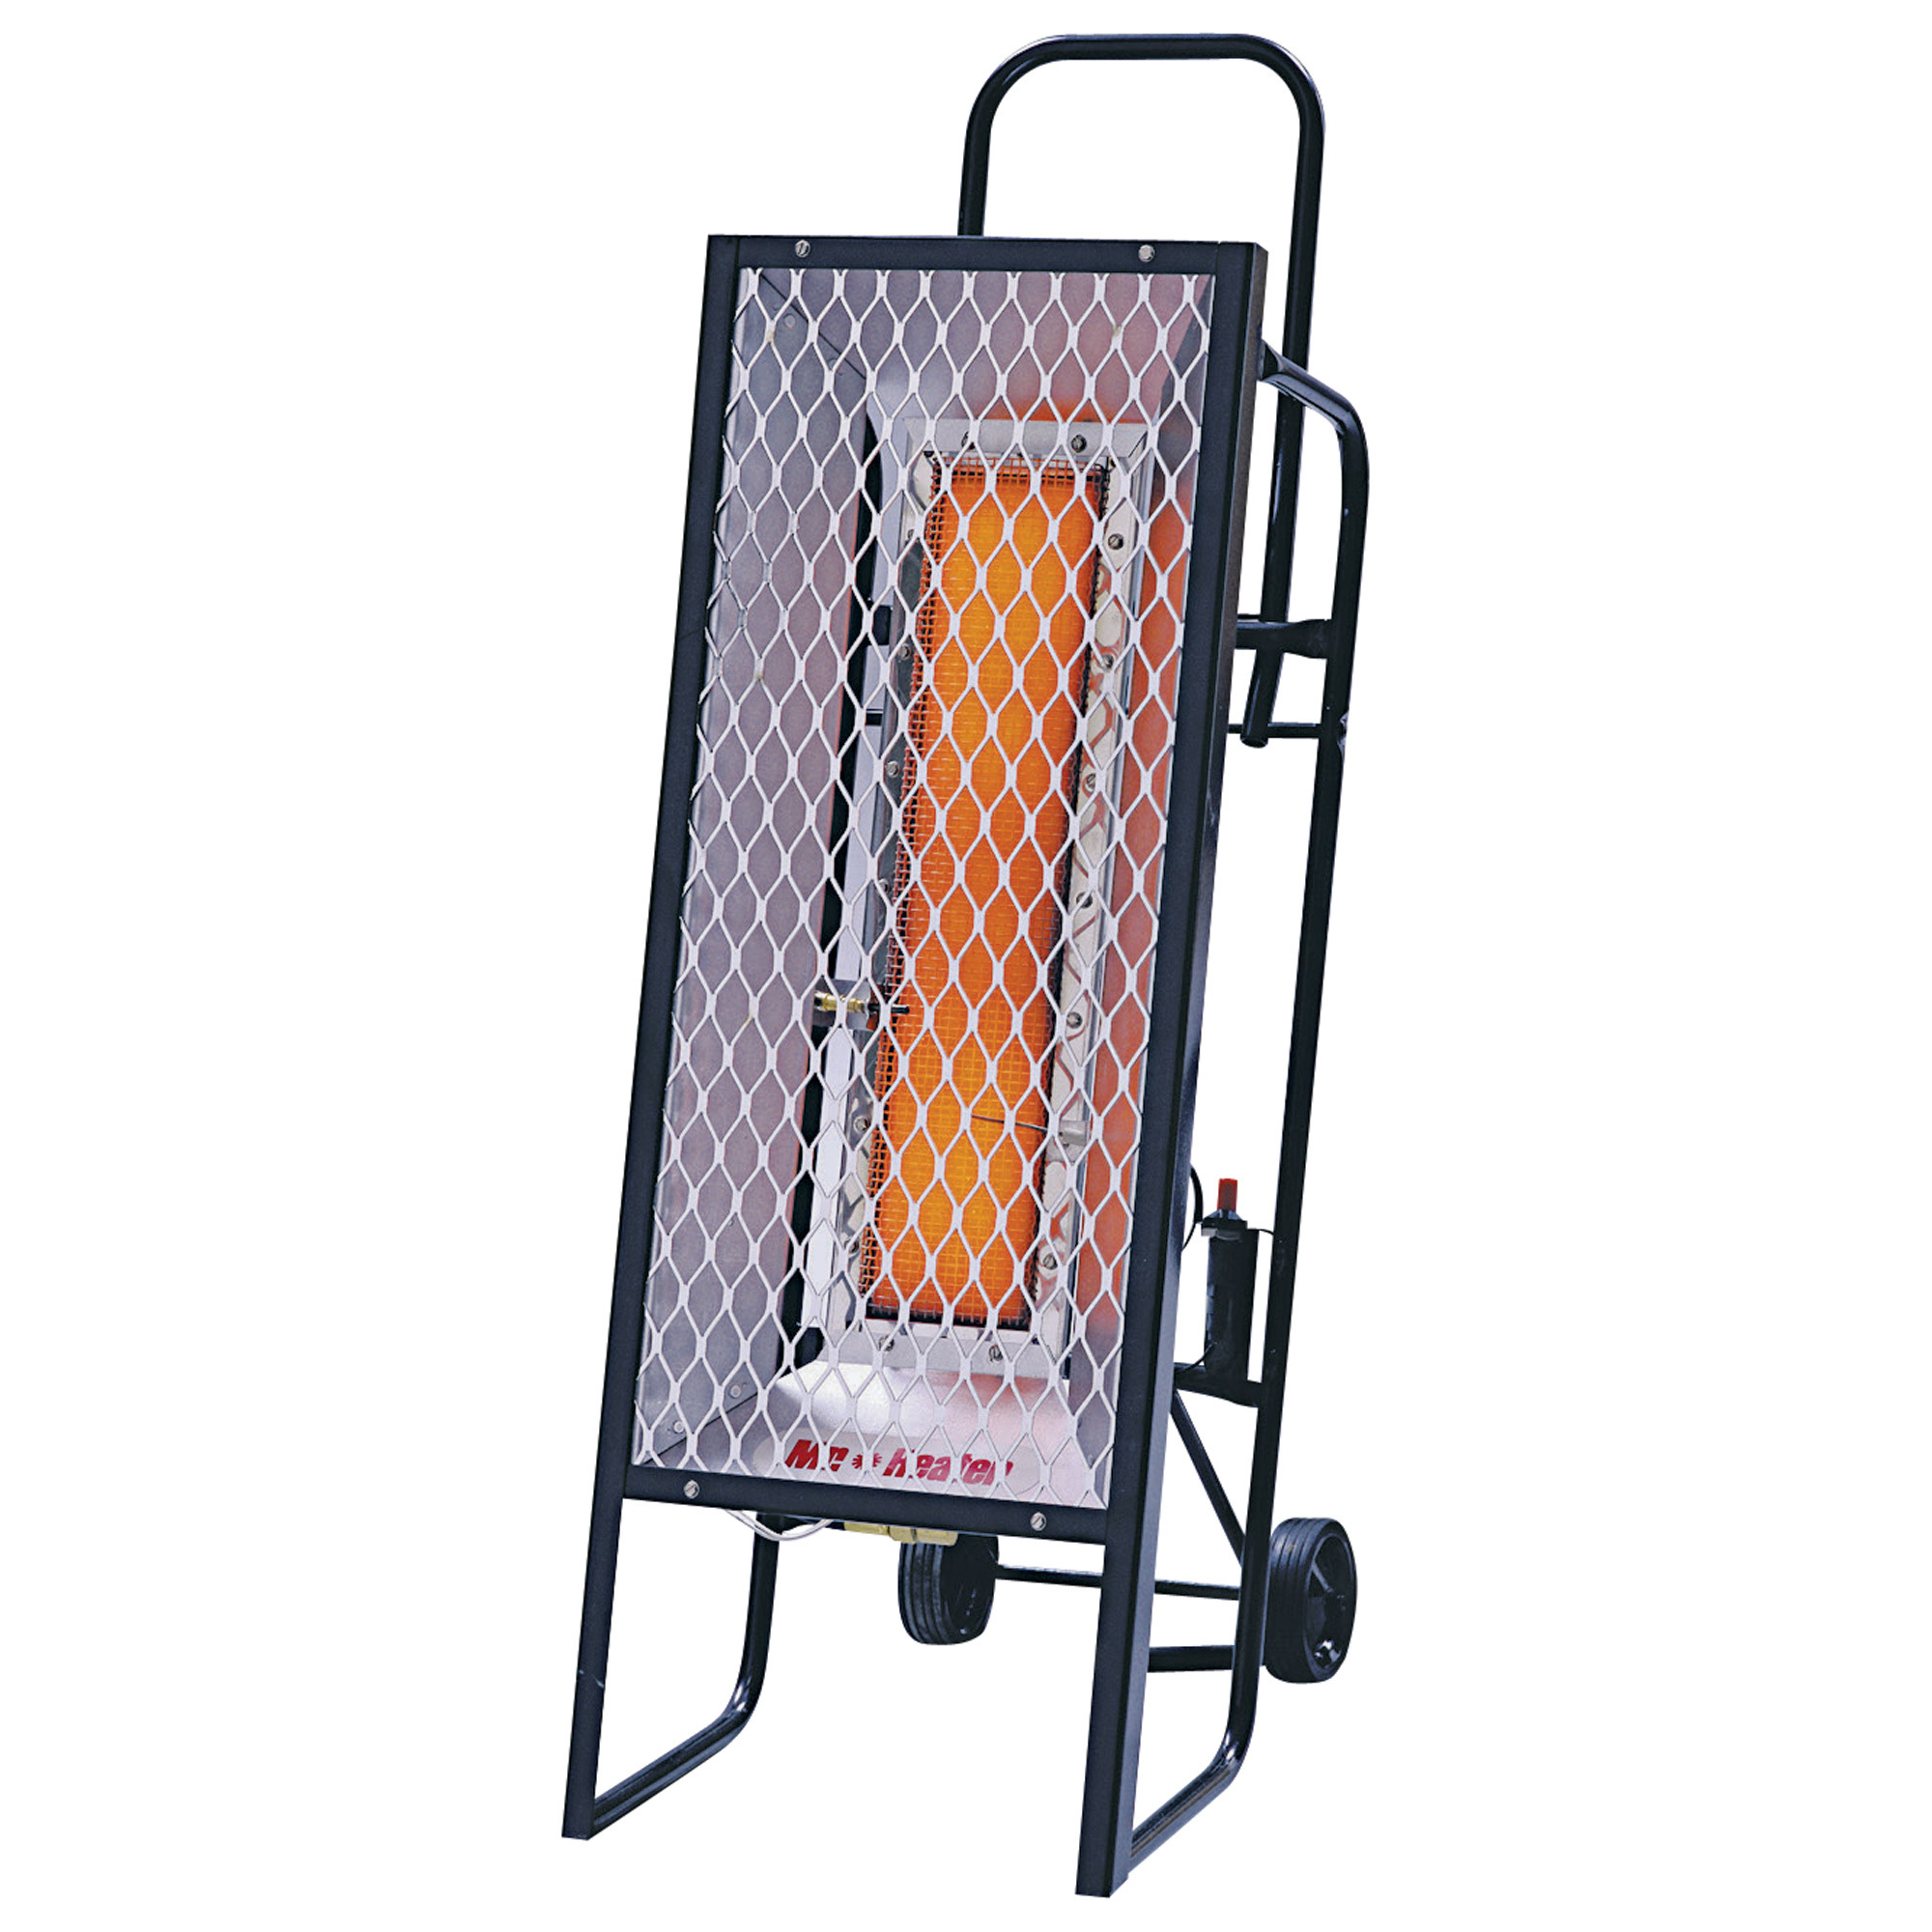 Mr. Heater Radiant Construction Heater, 35,000 BTU, Propane, Model F270700